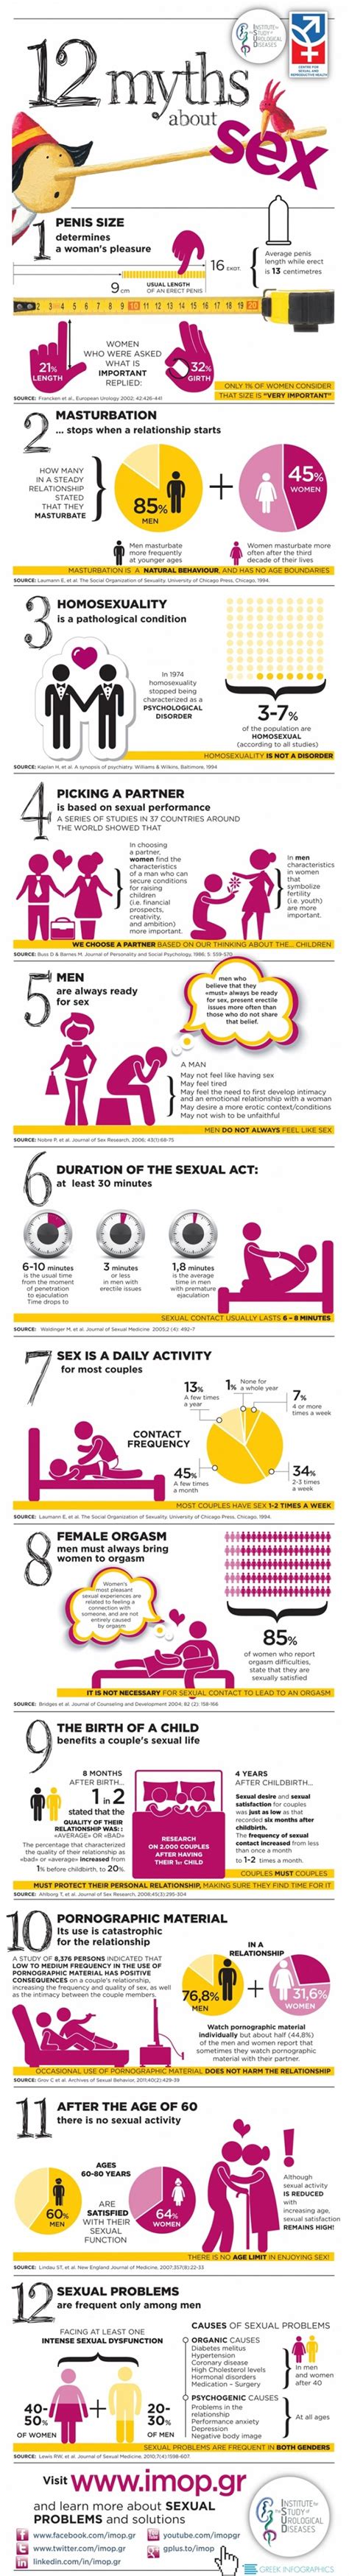 Infographic 12 Myths About Sex Matador Network